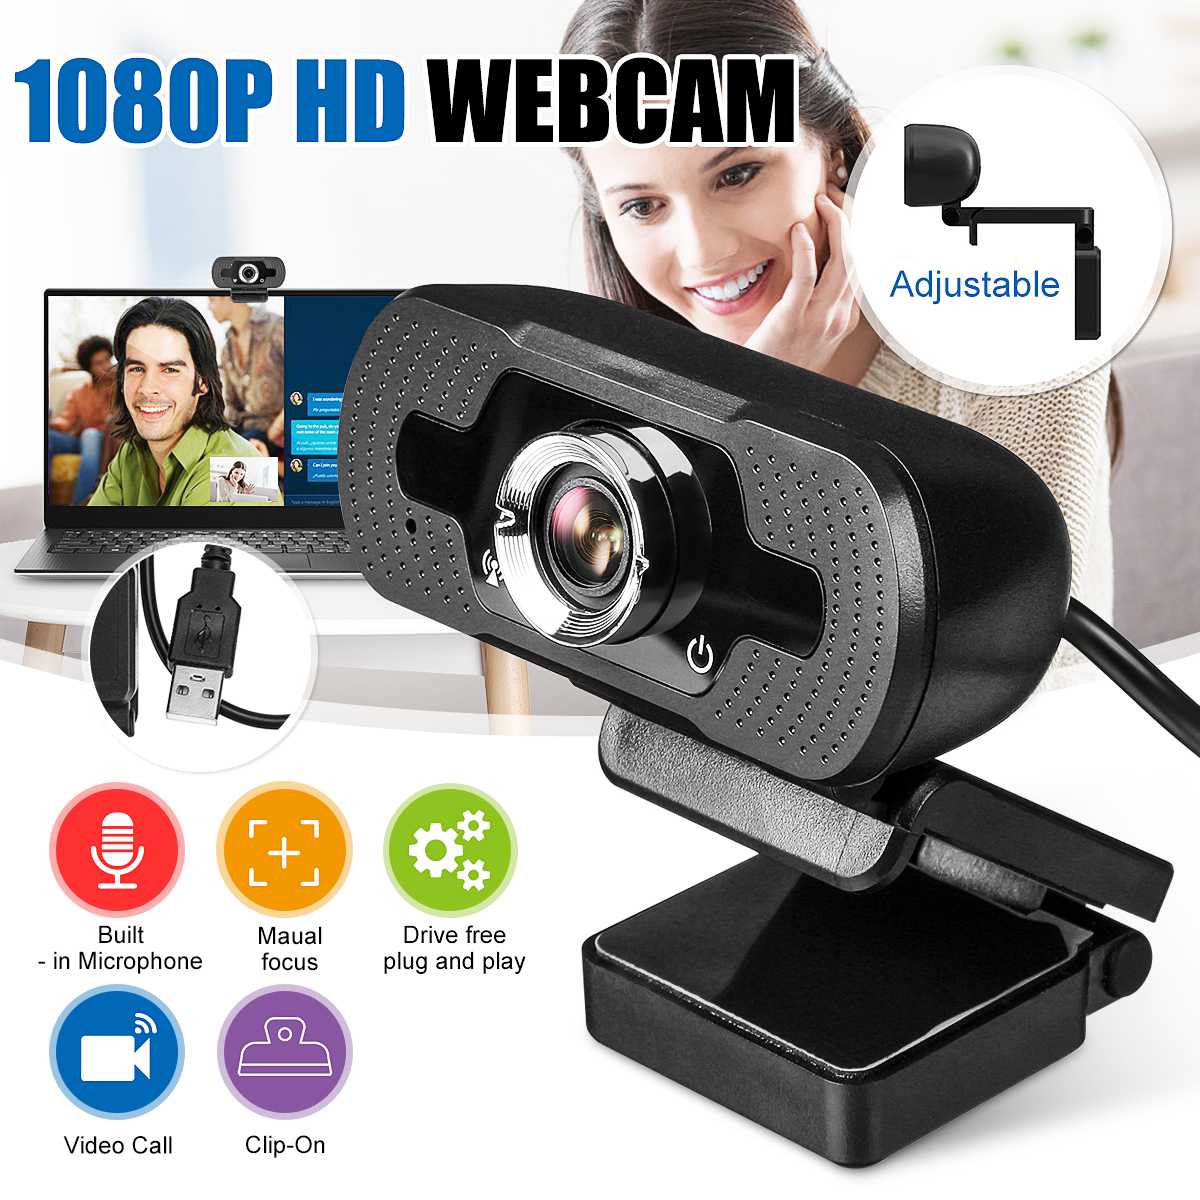 Adjustable-1080P-Macbook-Camera-USB-Webcam-Video-Calling-Web-Cam--Microphone-1681631-1